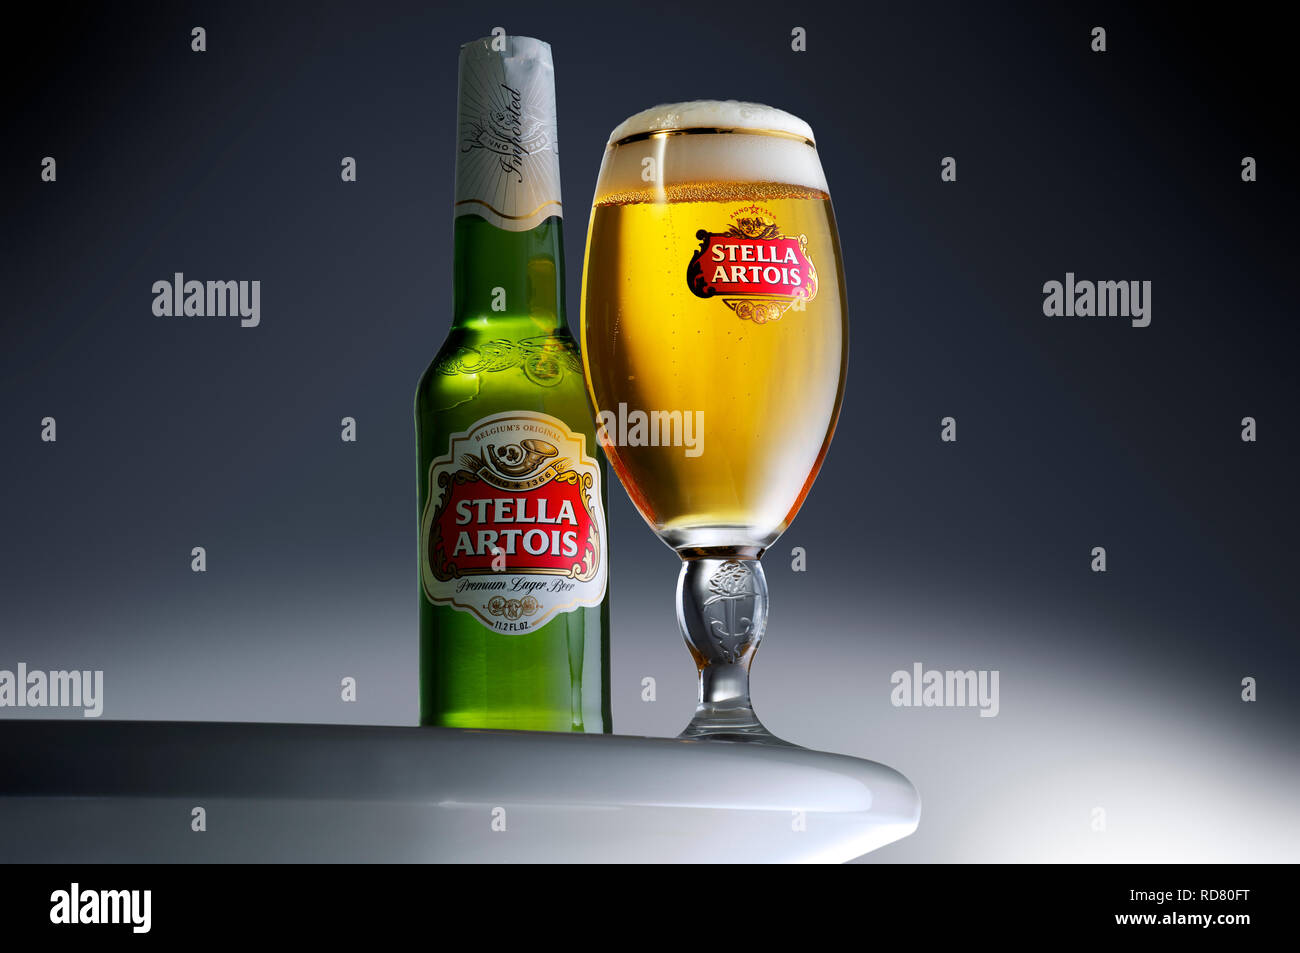 Bottle of Stella Artois and full glass, studio shot Stock Photo